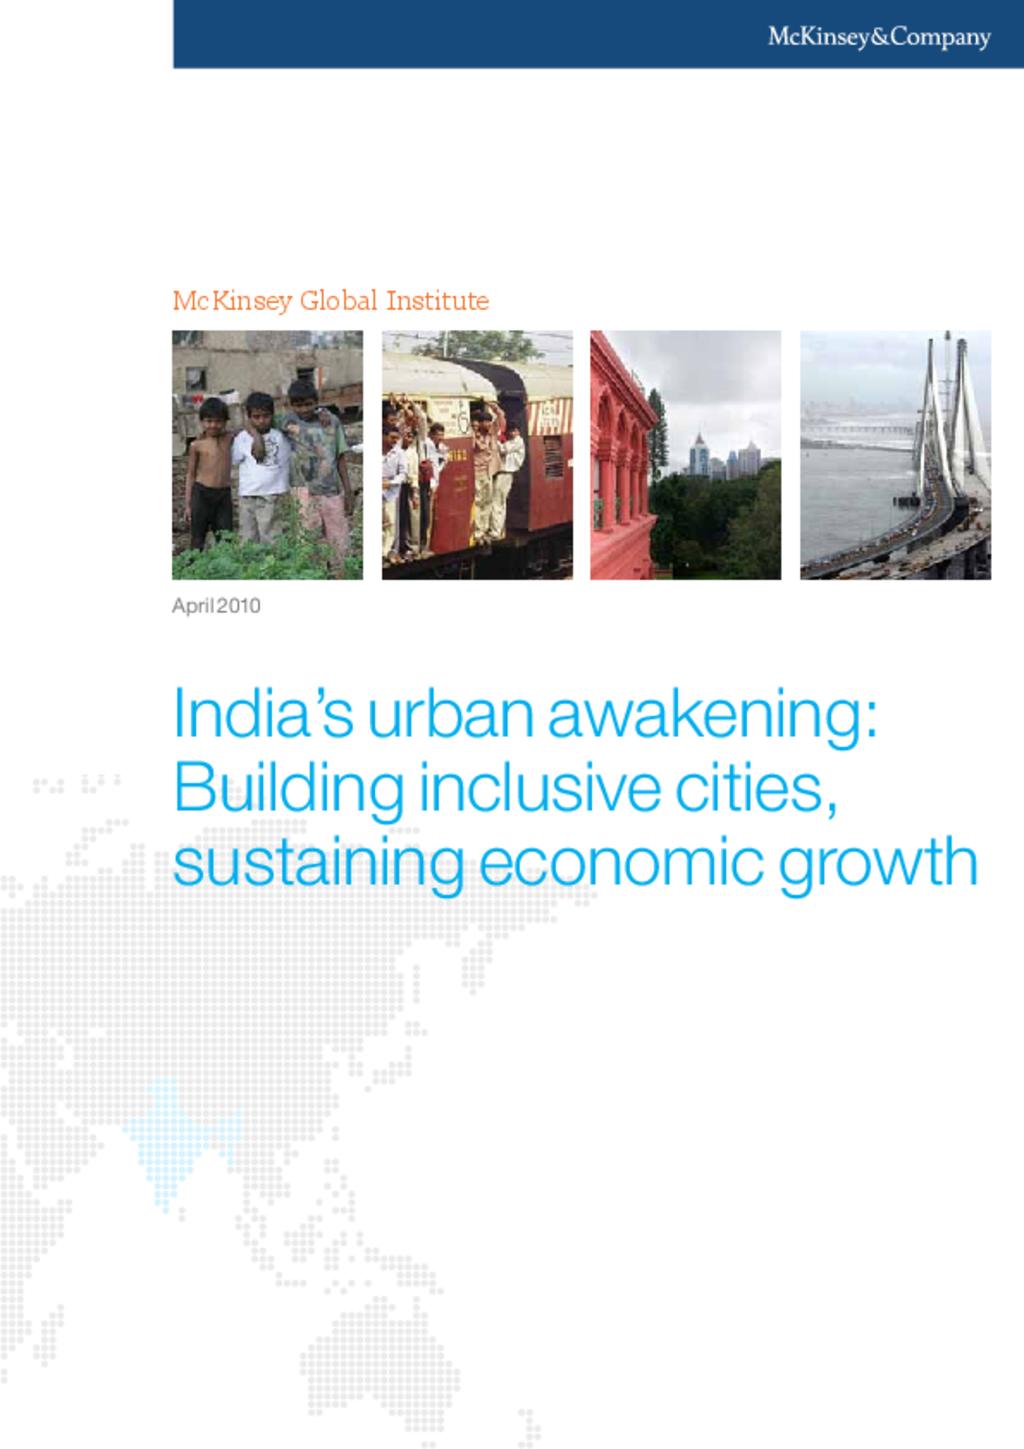 India's urban awakening: Building inclusive cities, sustaining economic growth